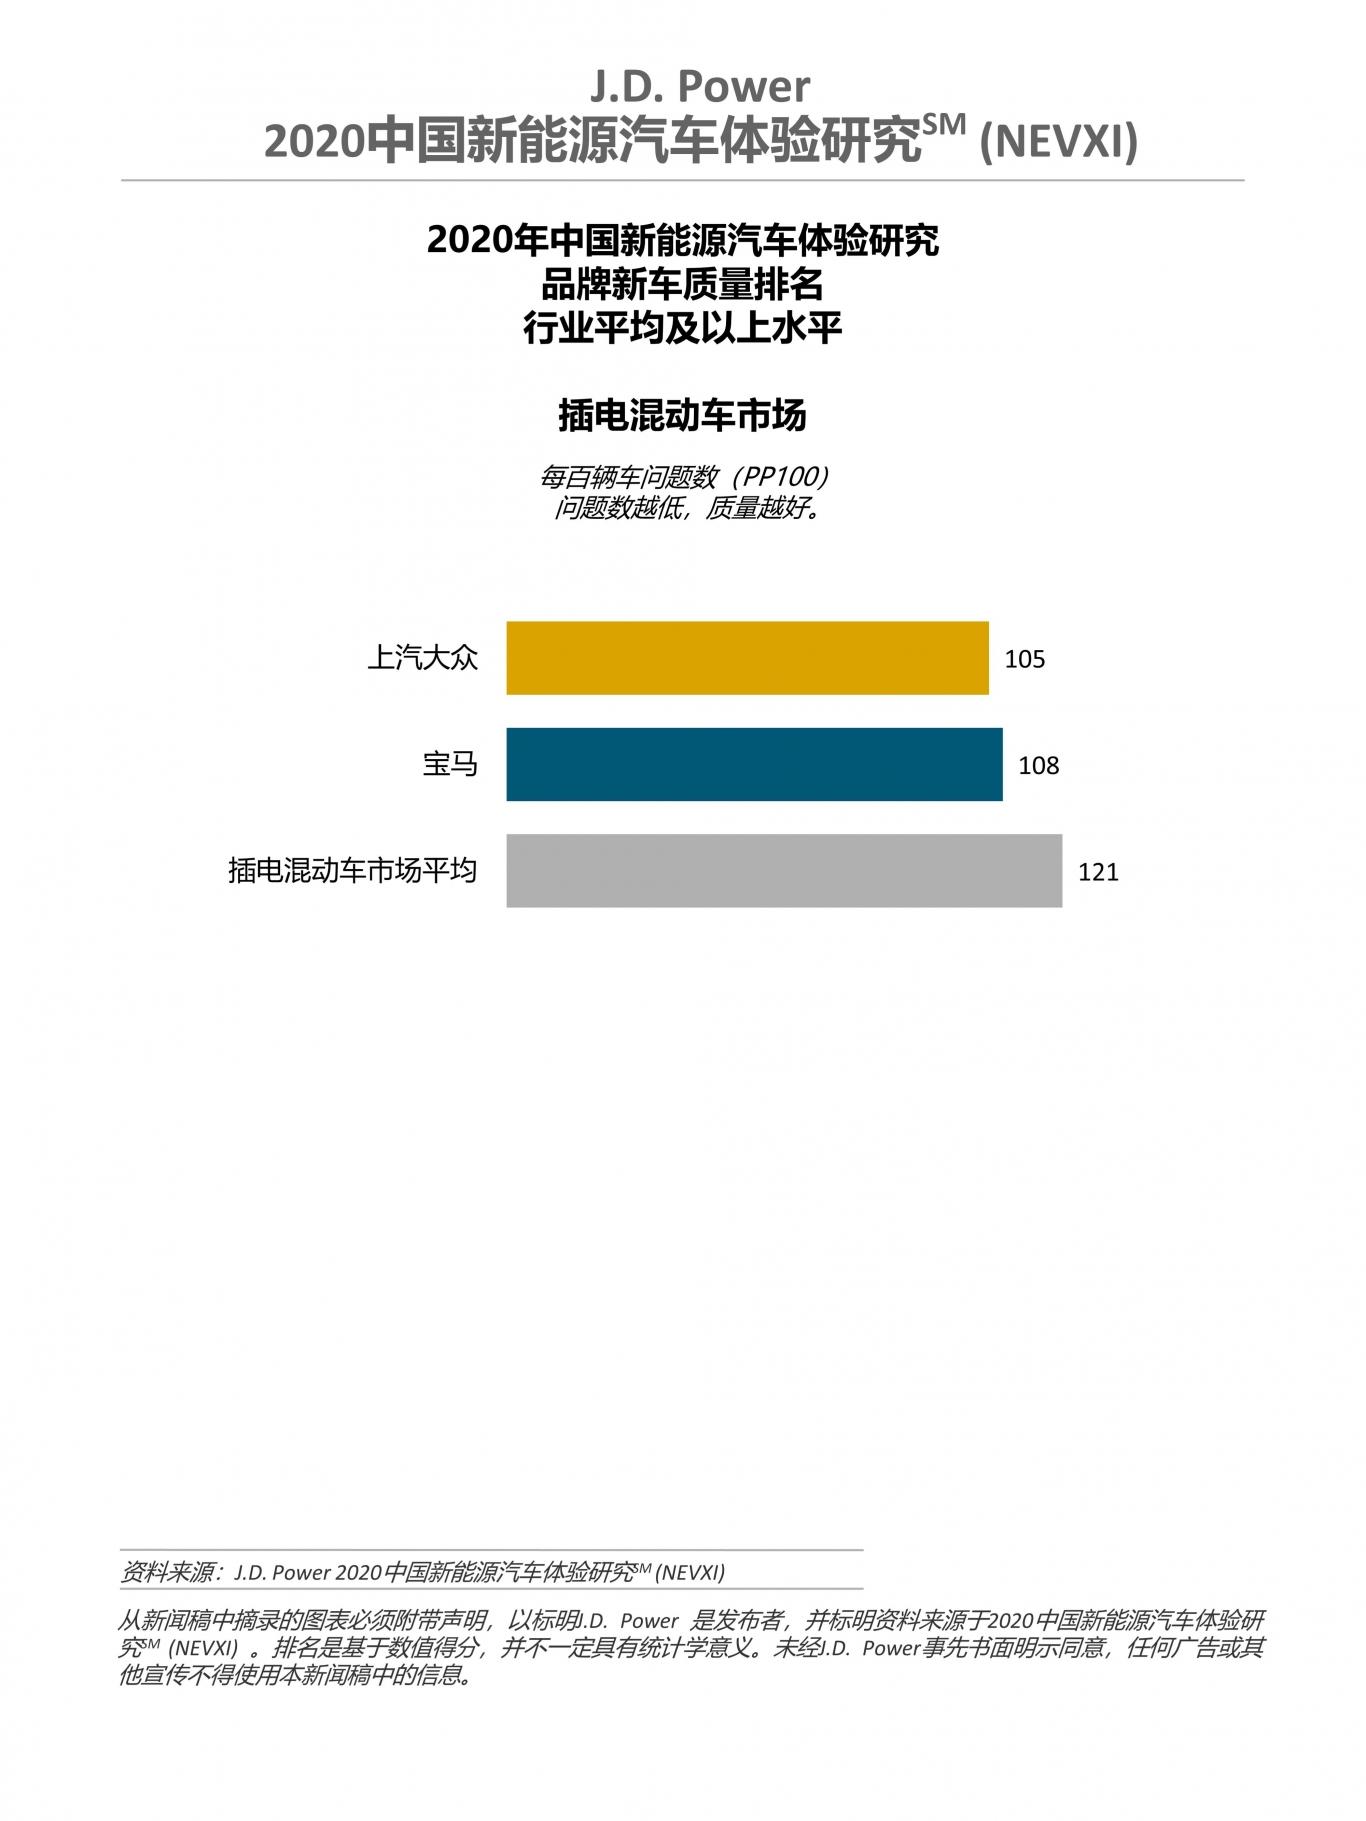 2020 China NEVXI Charts CN final_1.jpg